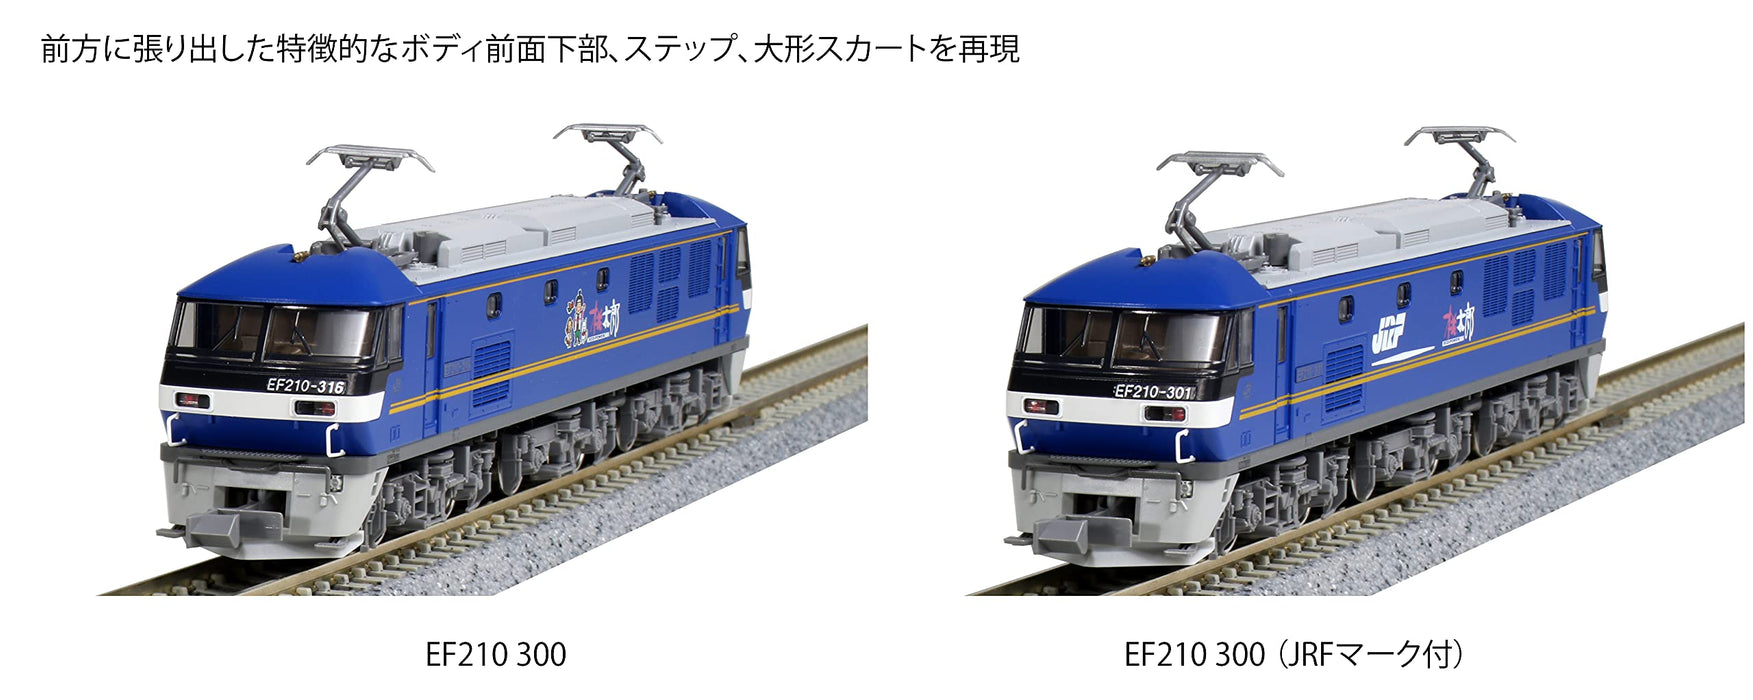 KATO 3092-1 Electric Locomotive Ef210 300 N Scale